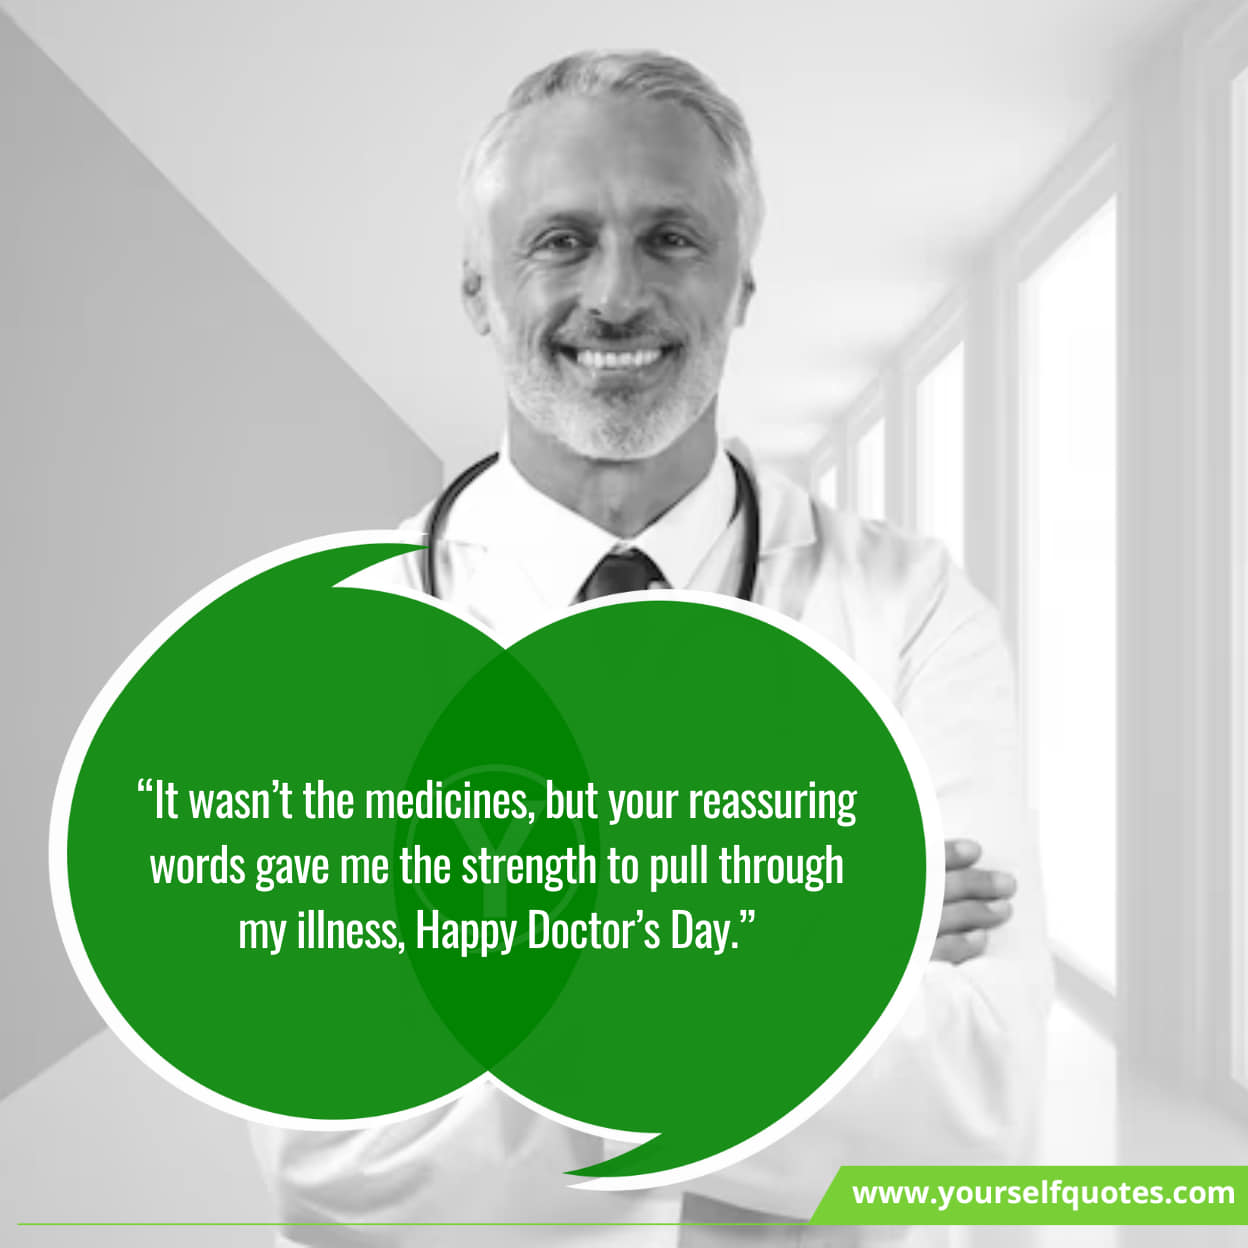 Doctors' Day Sayings & Greetings